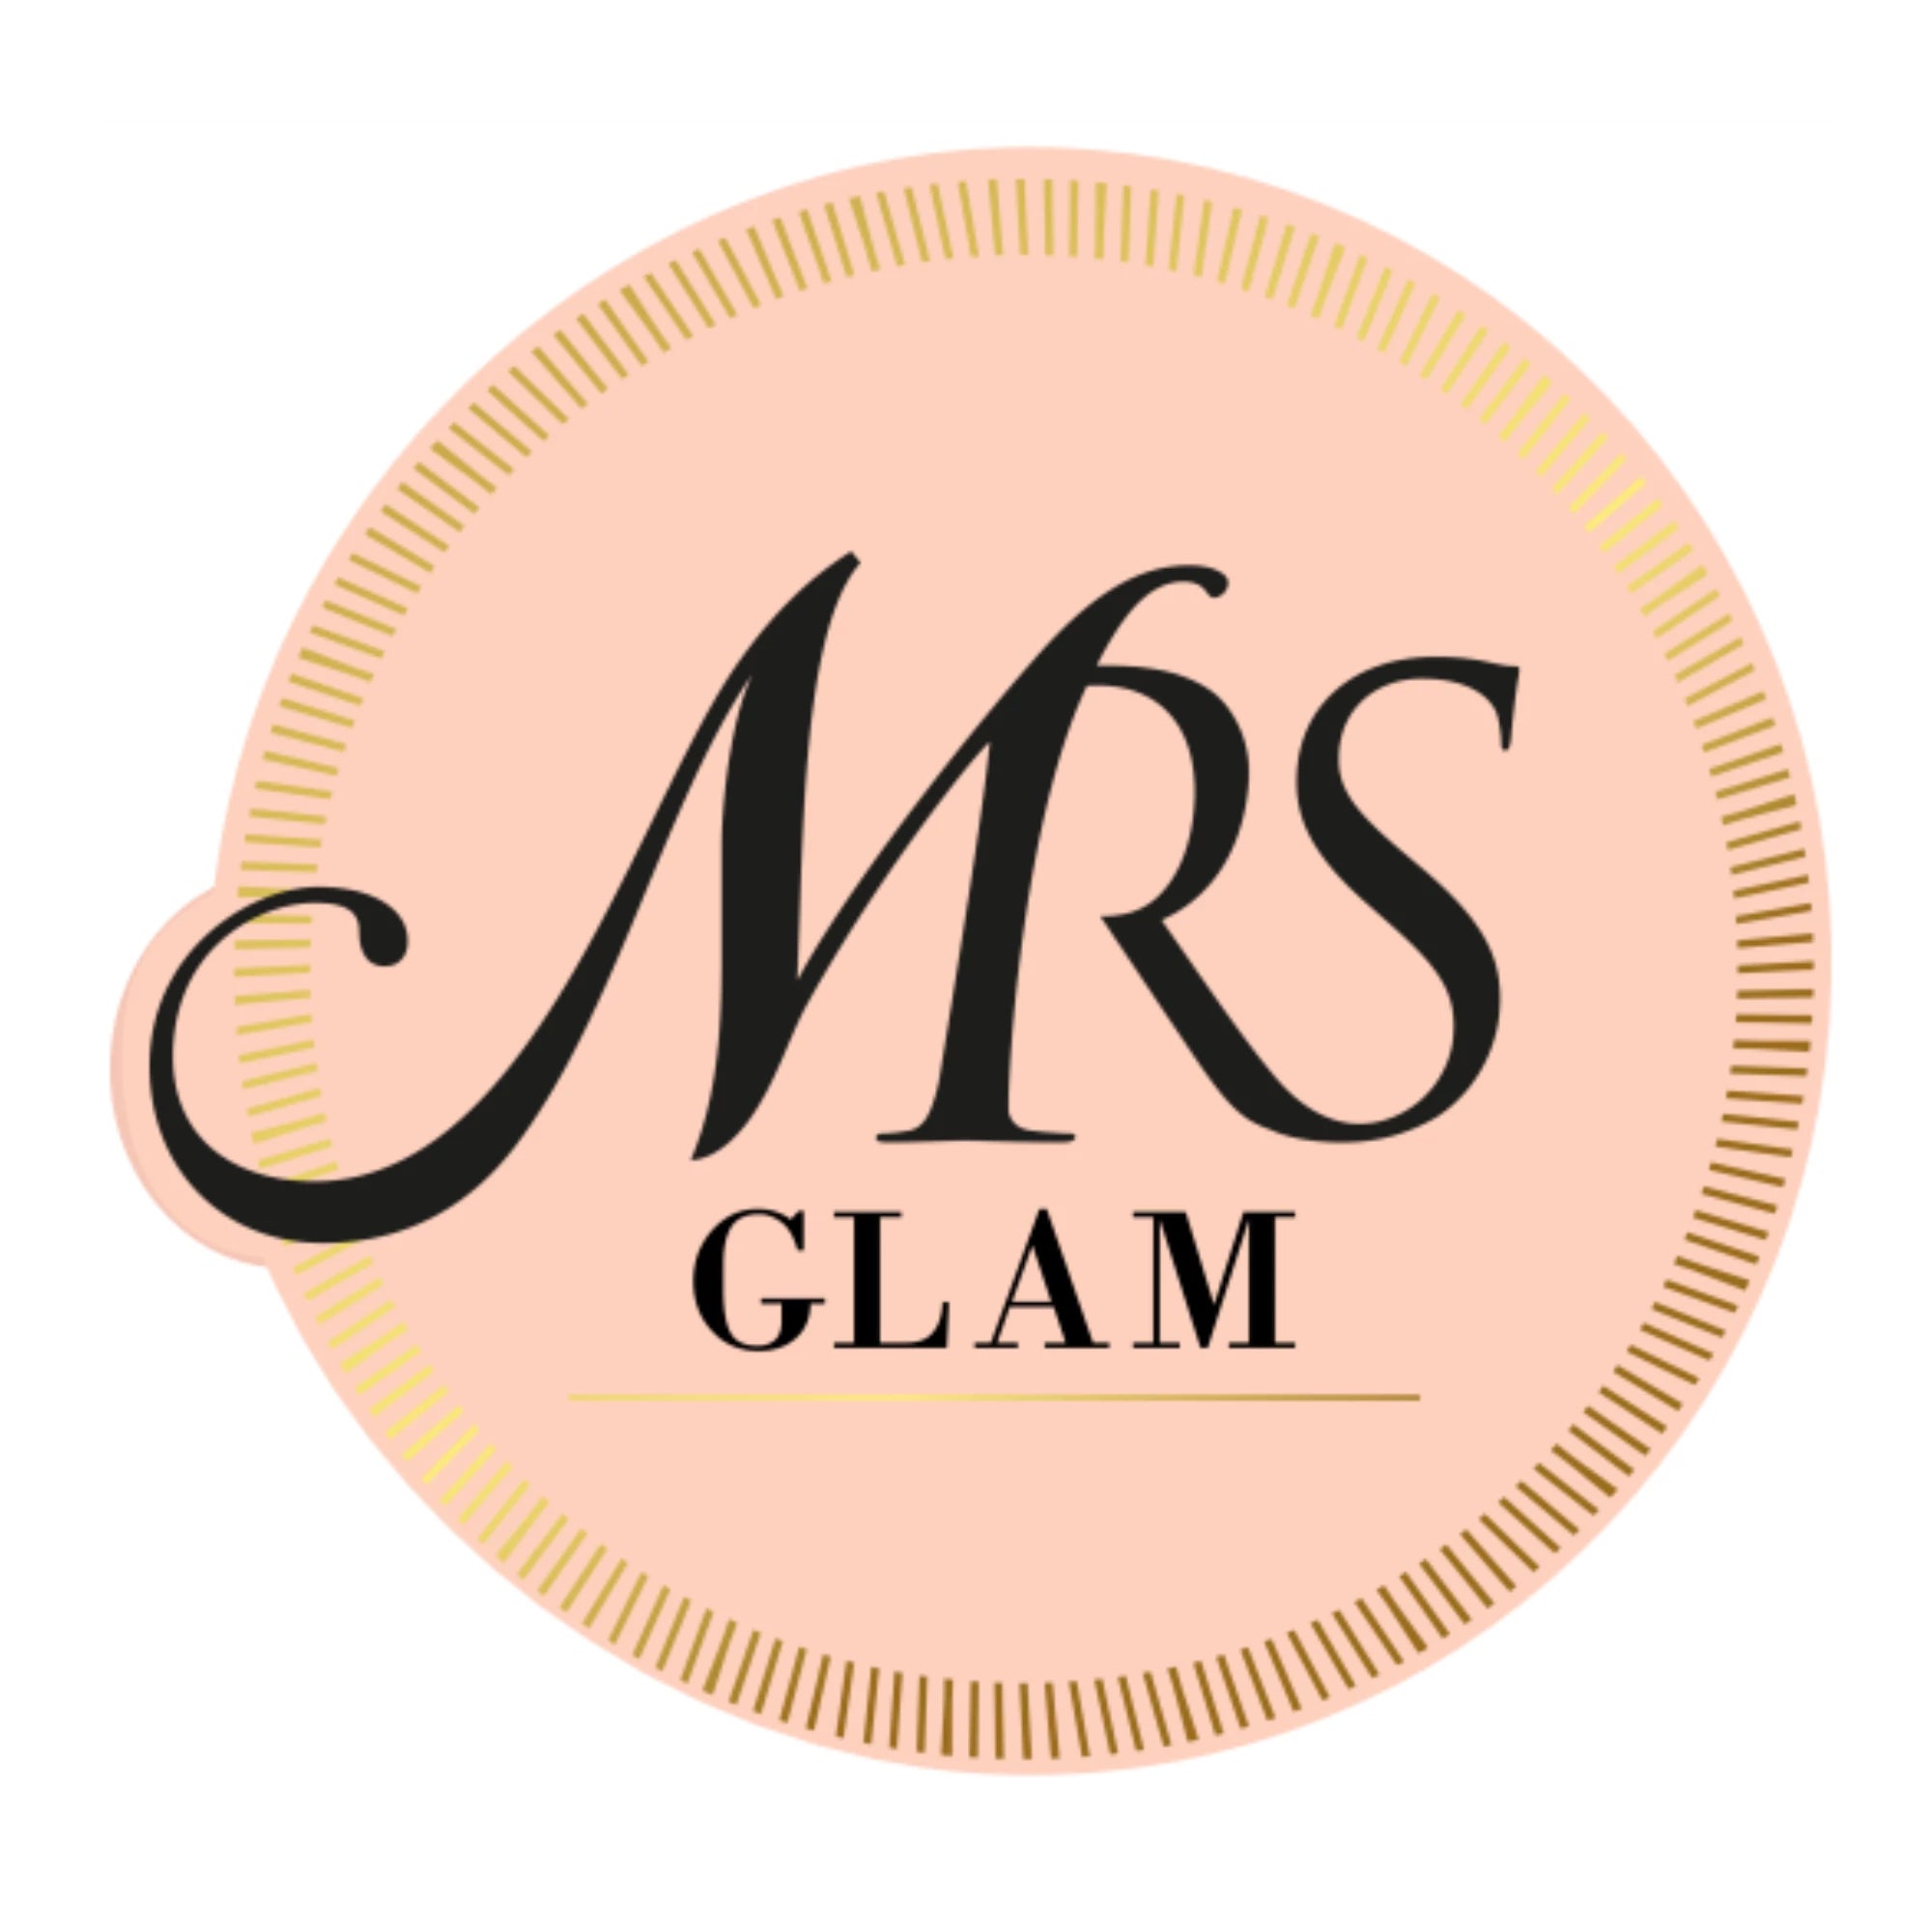 Mrs Glam - BPerfect Cosmetics